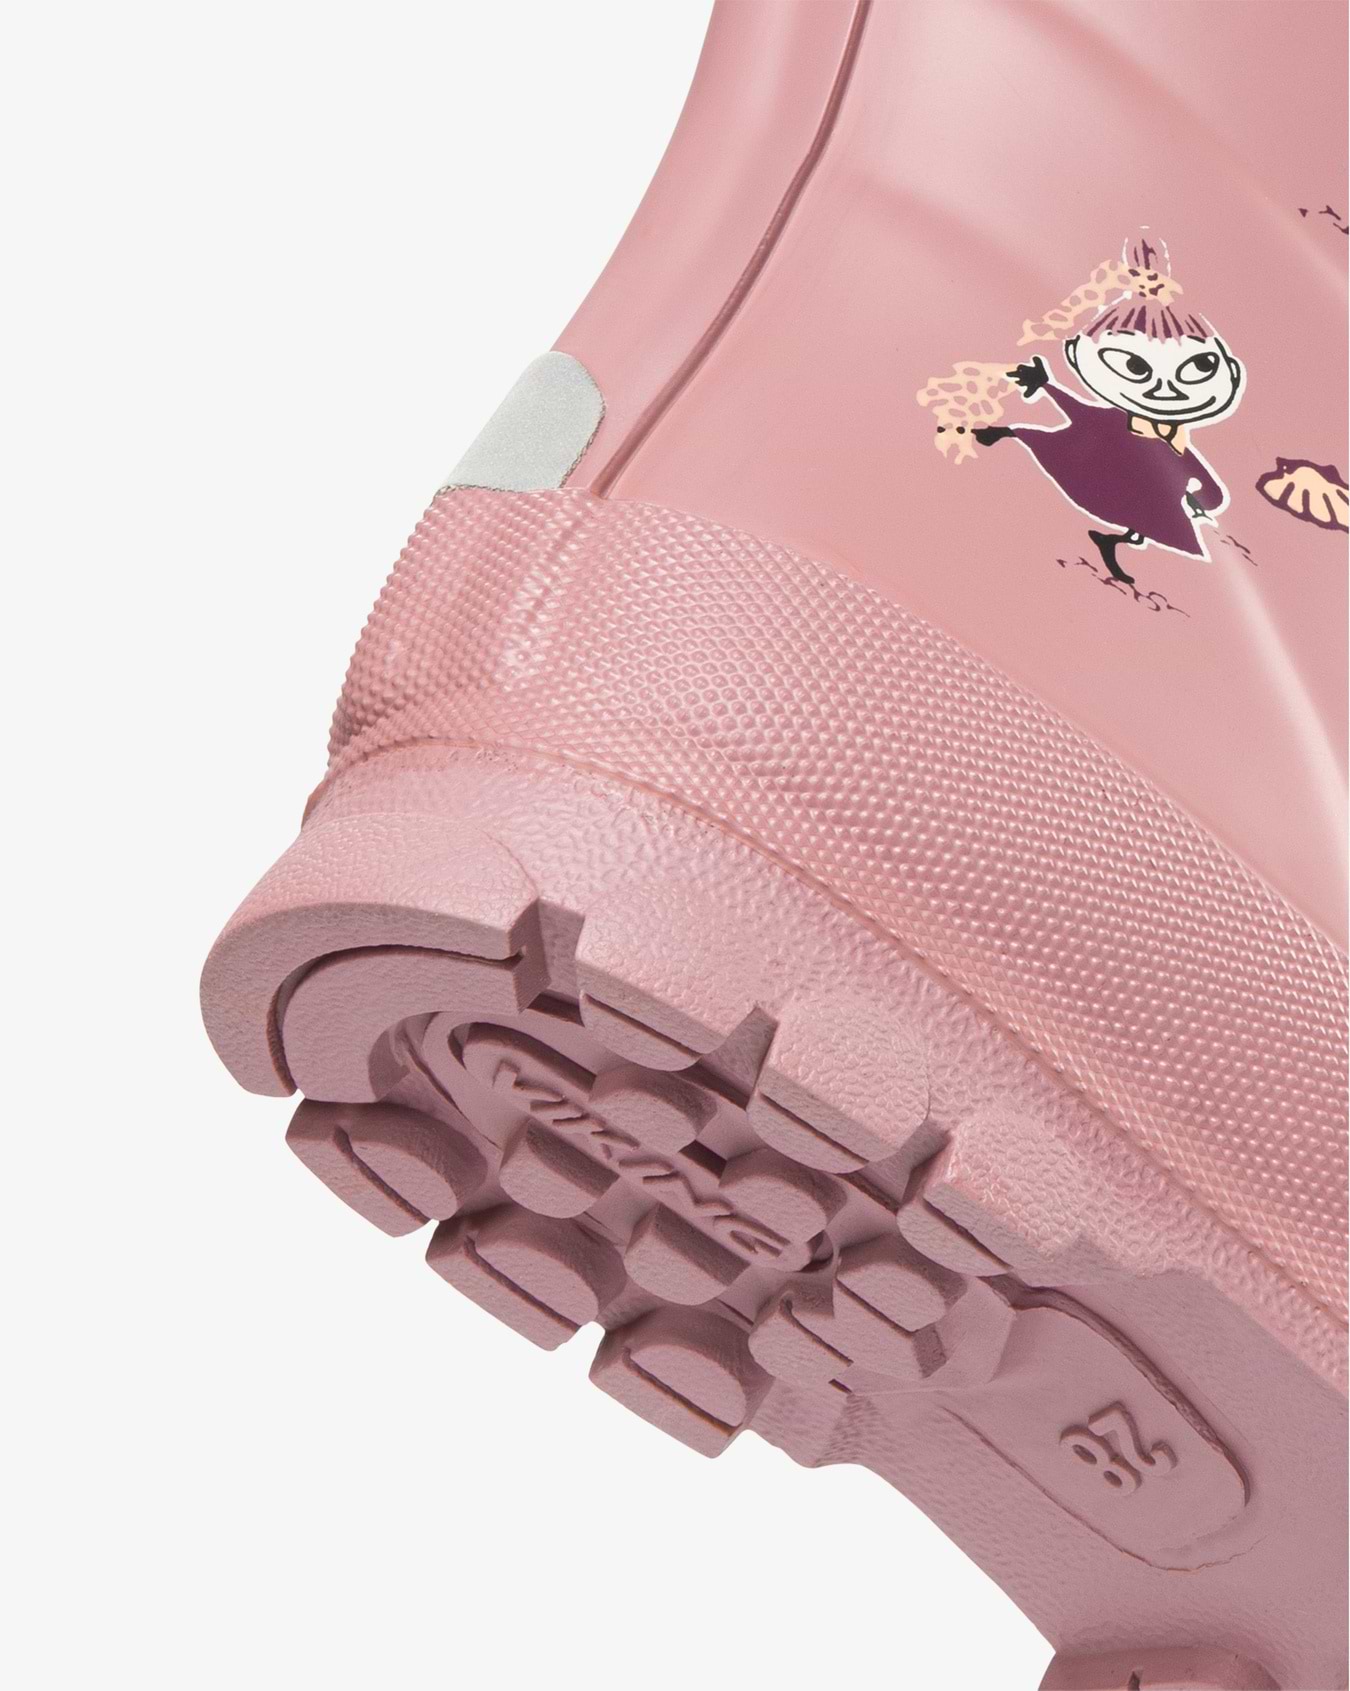 Viking Jolly Moomin Kids Rubber Boots Pink